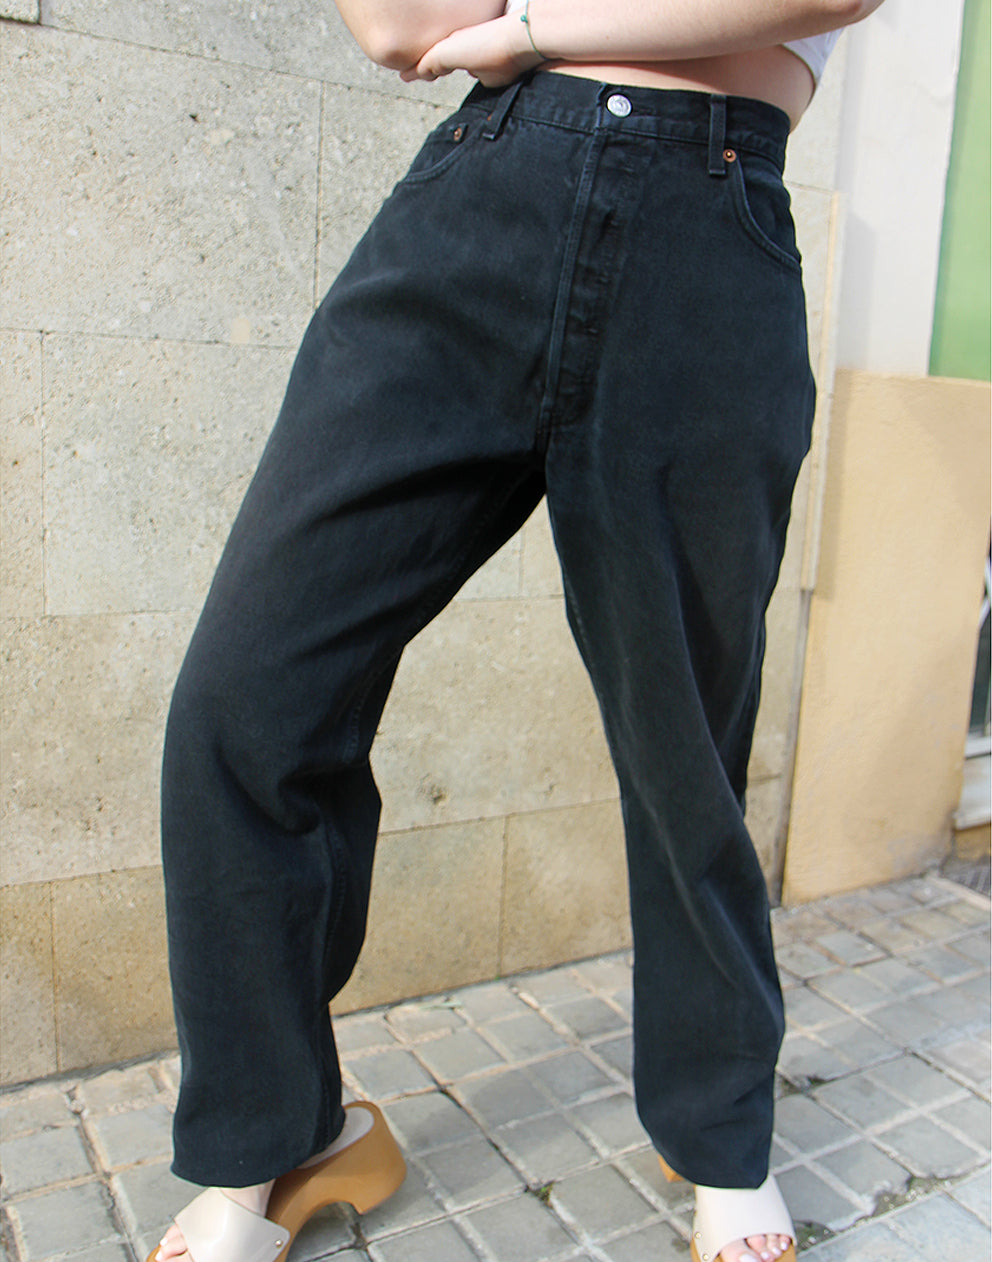 Original Levi's 501 Black Denim High Rise Tall Jeans 36"/ 92cm waist